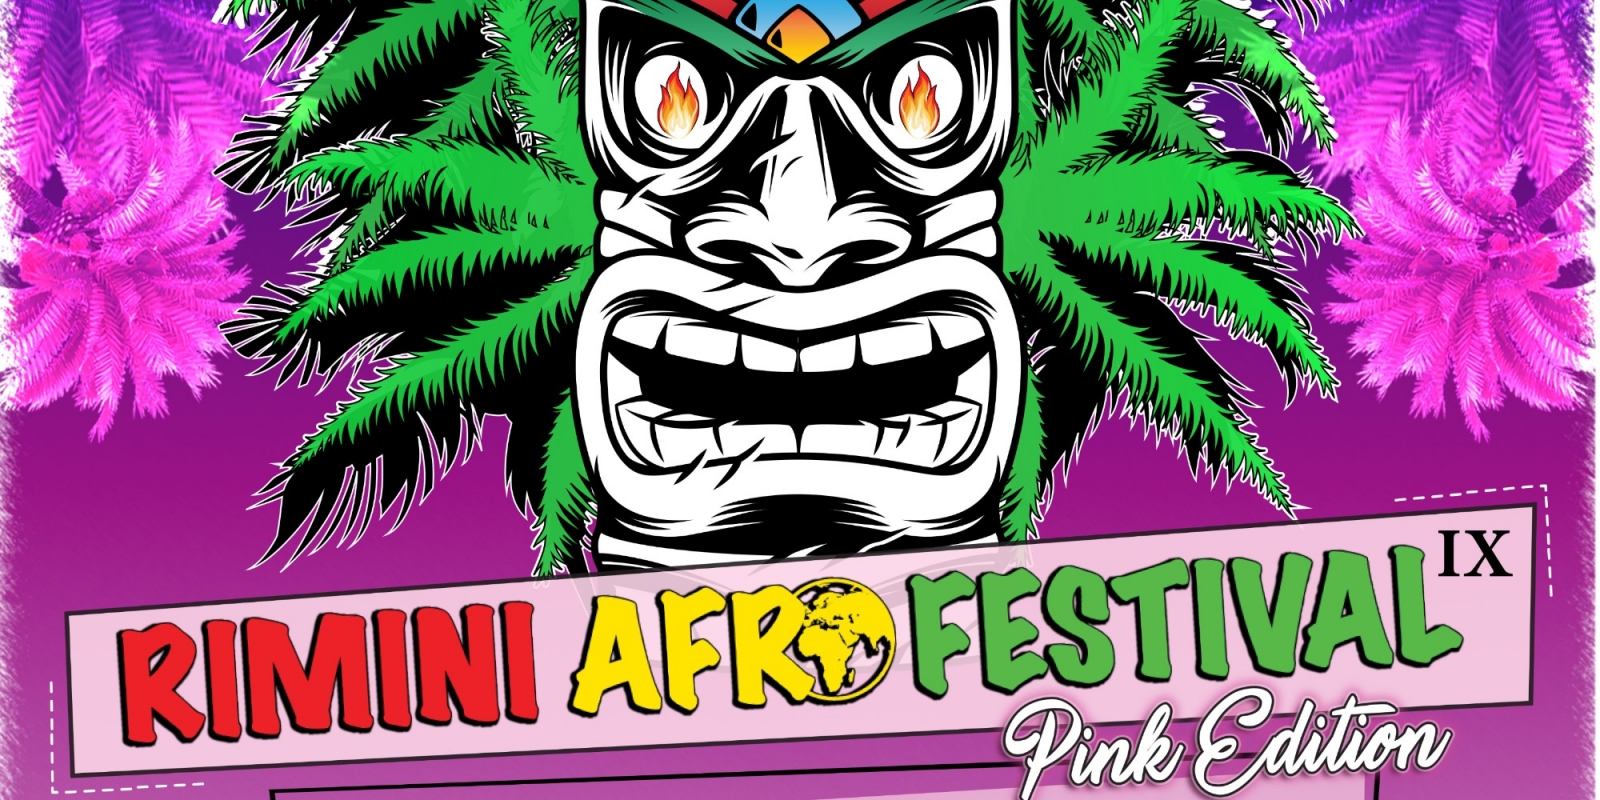 Rimini Afro Festival - Pink edition